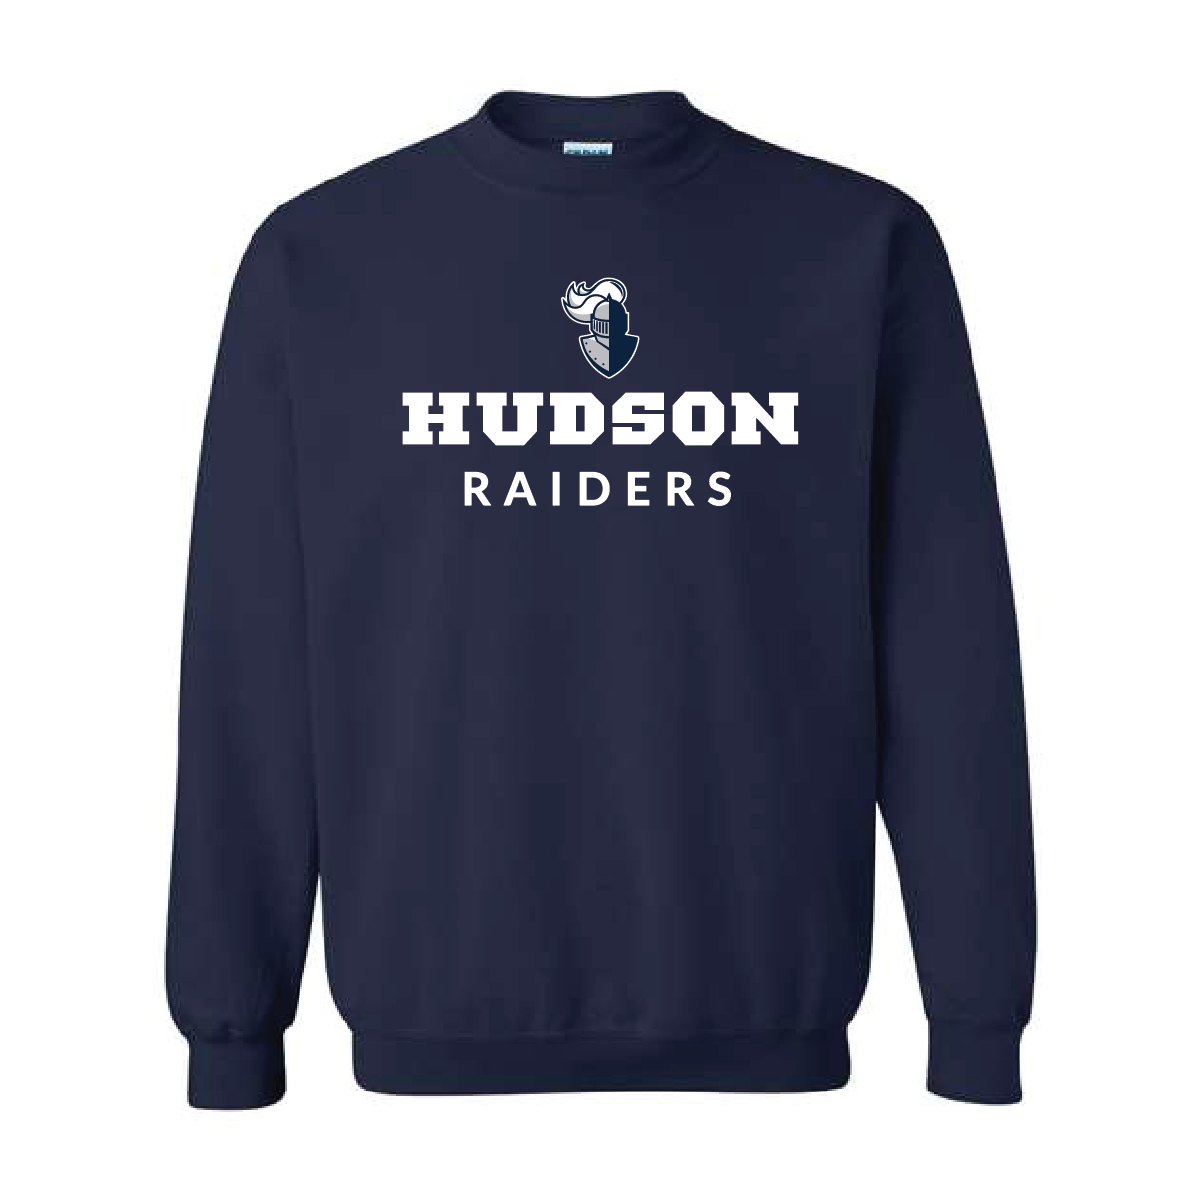 Hudson Raiders Crewneck Sweatshirt - Adult and Youth